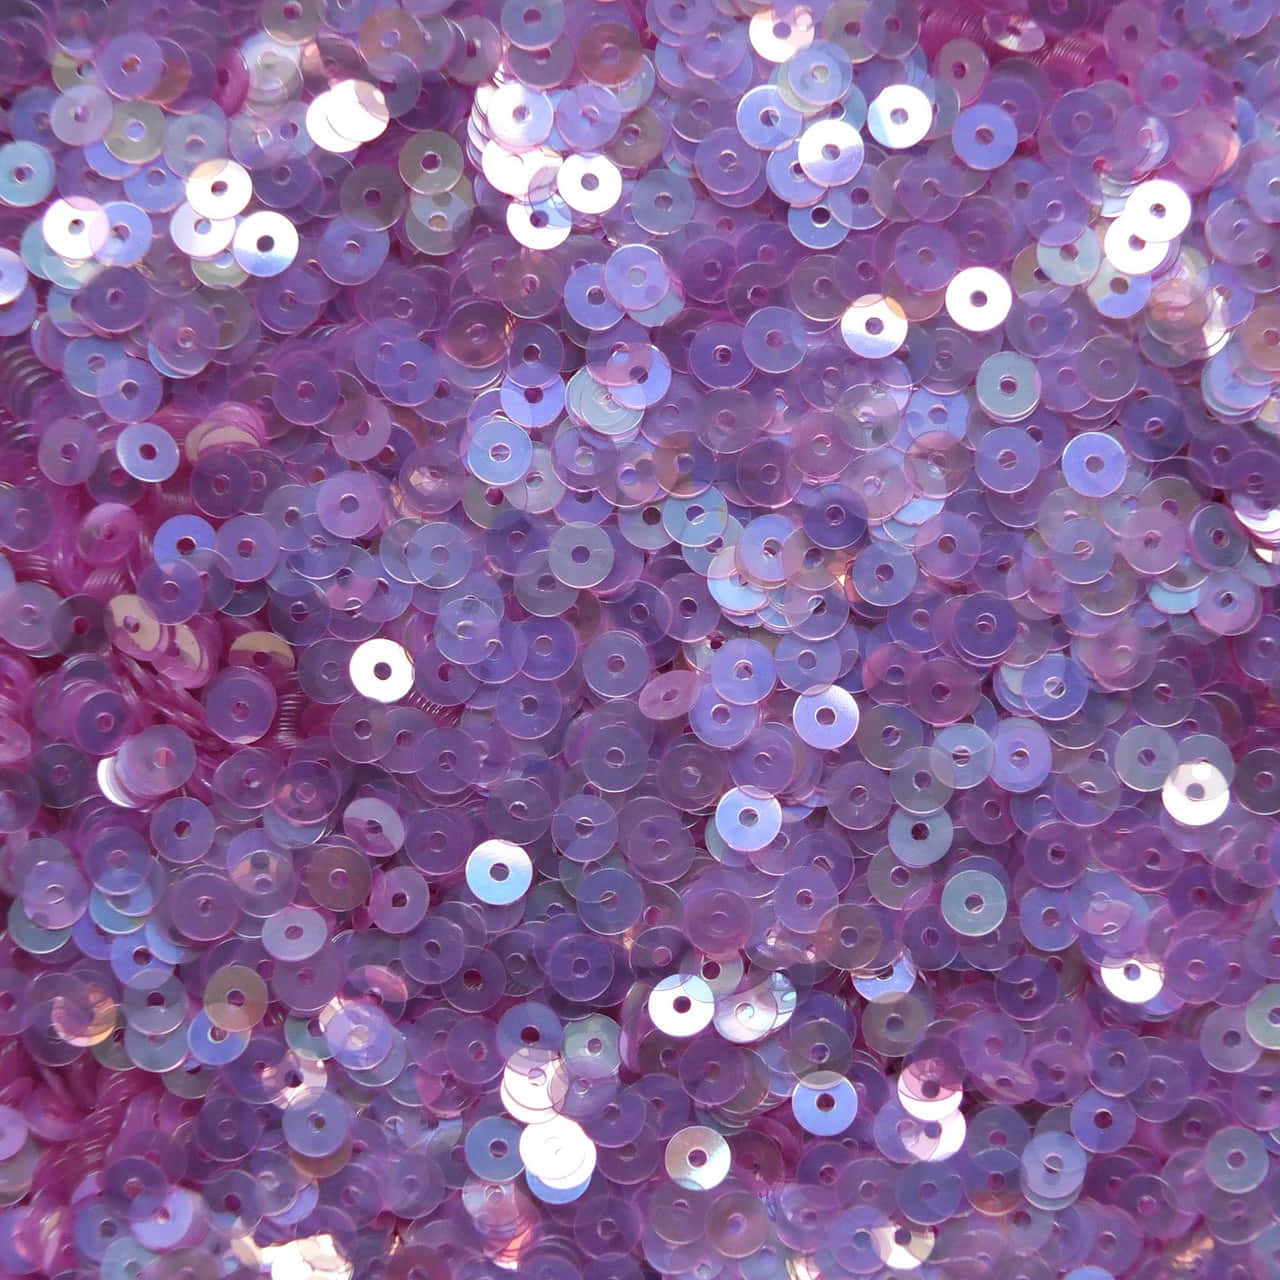 Shine Bright Like the Stars in Purple Sequins Wallpaper